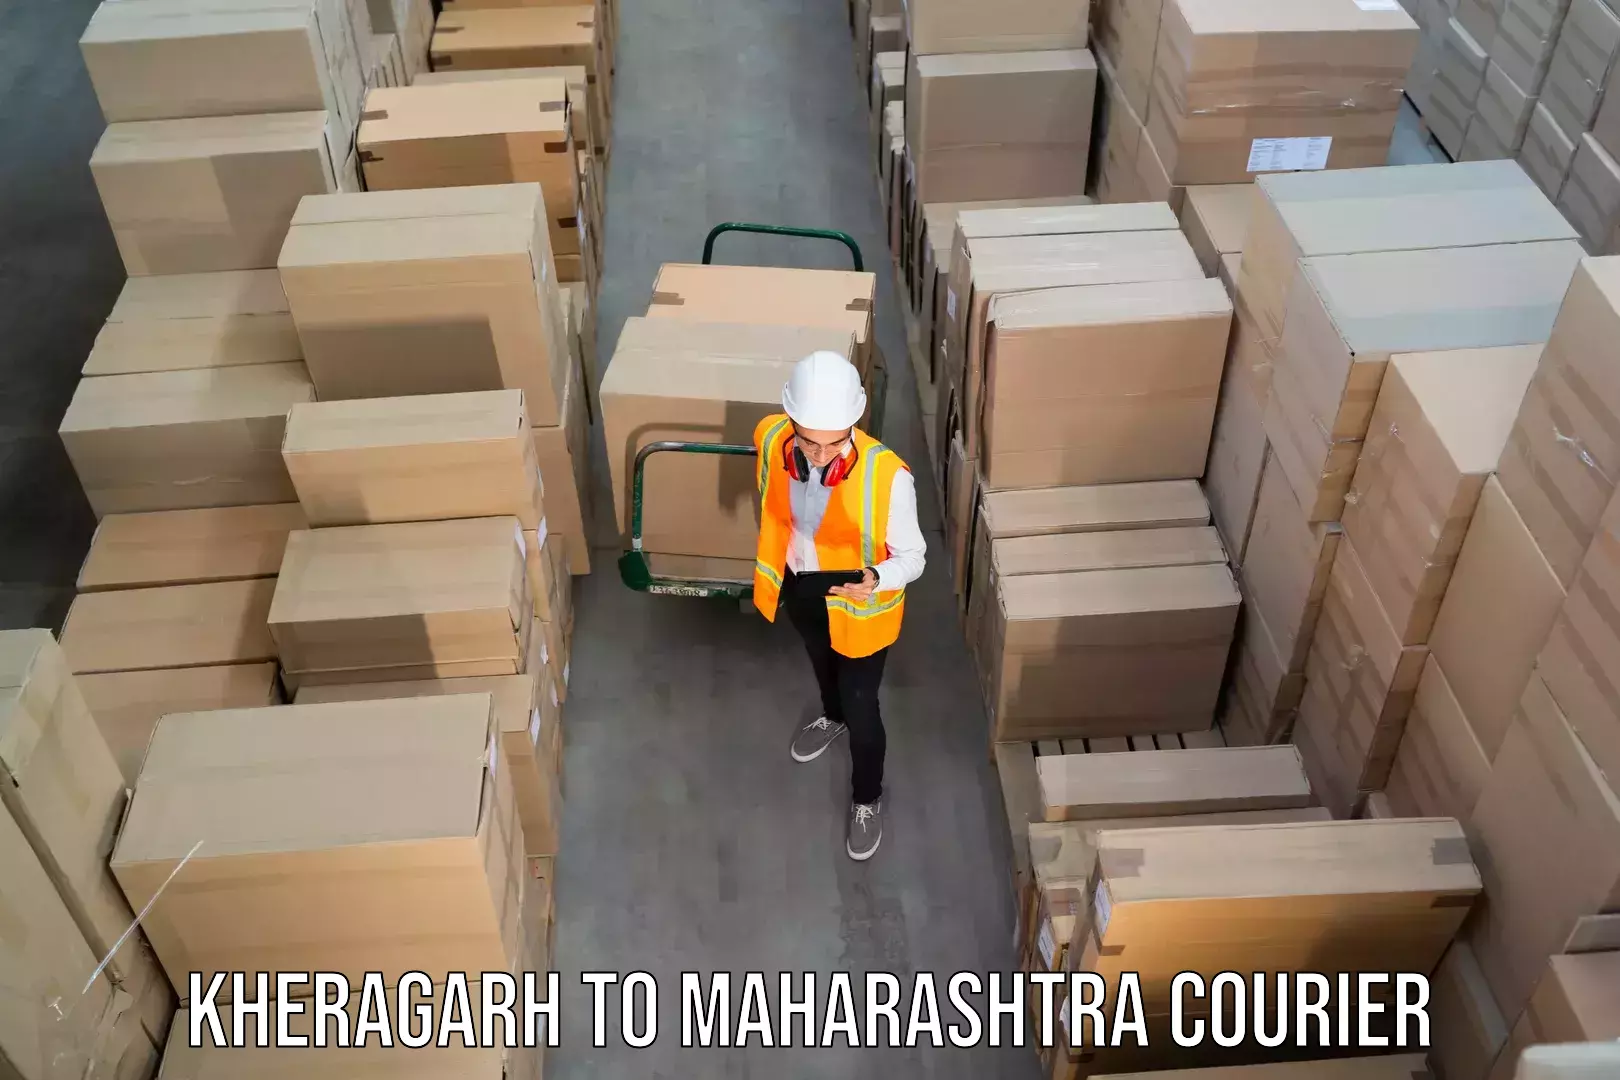 Efficient order fulfillment Kheragarh to Maharashtra